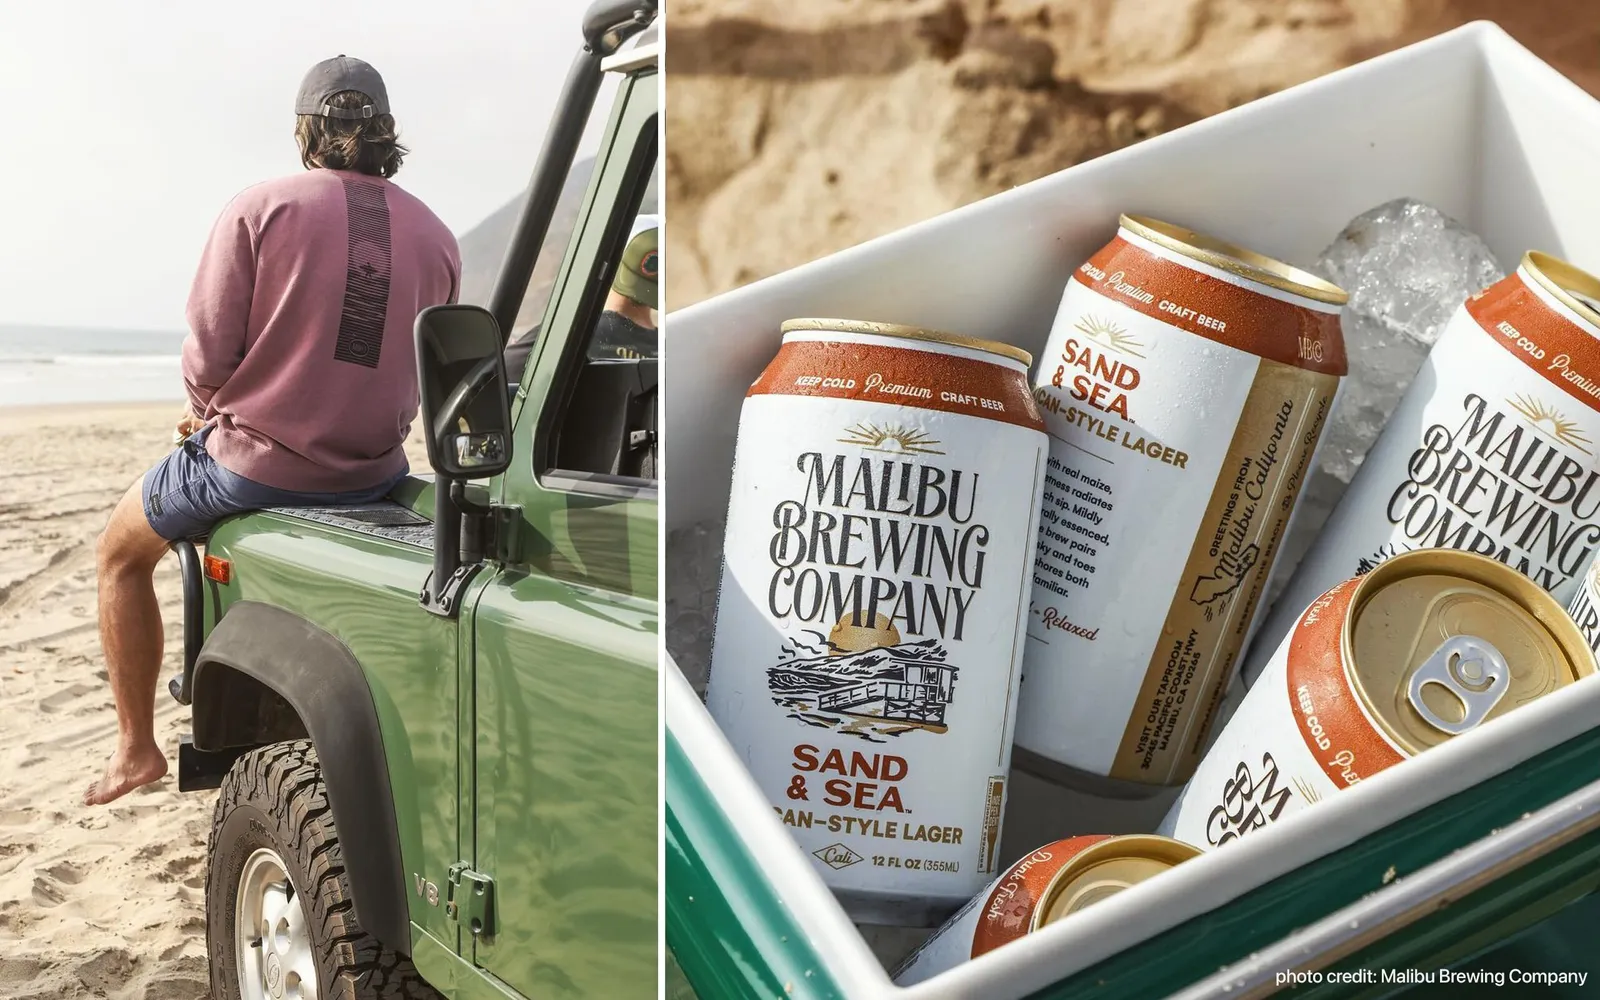 Malibu Brewing Co sweatshirt cans by anthem branding